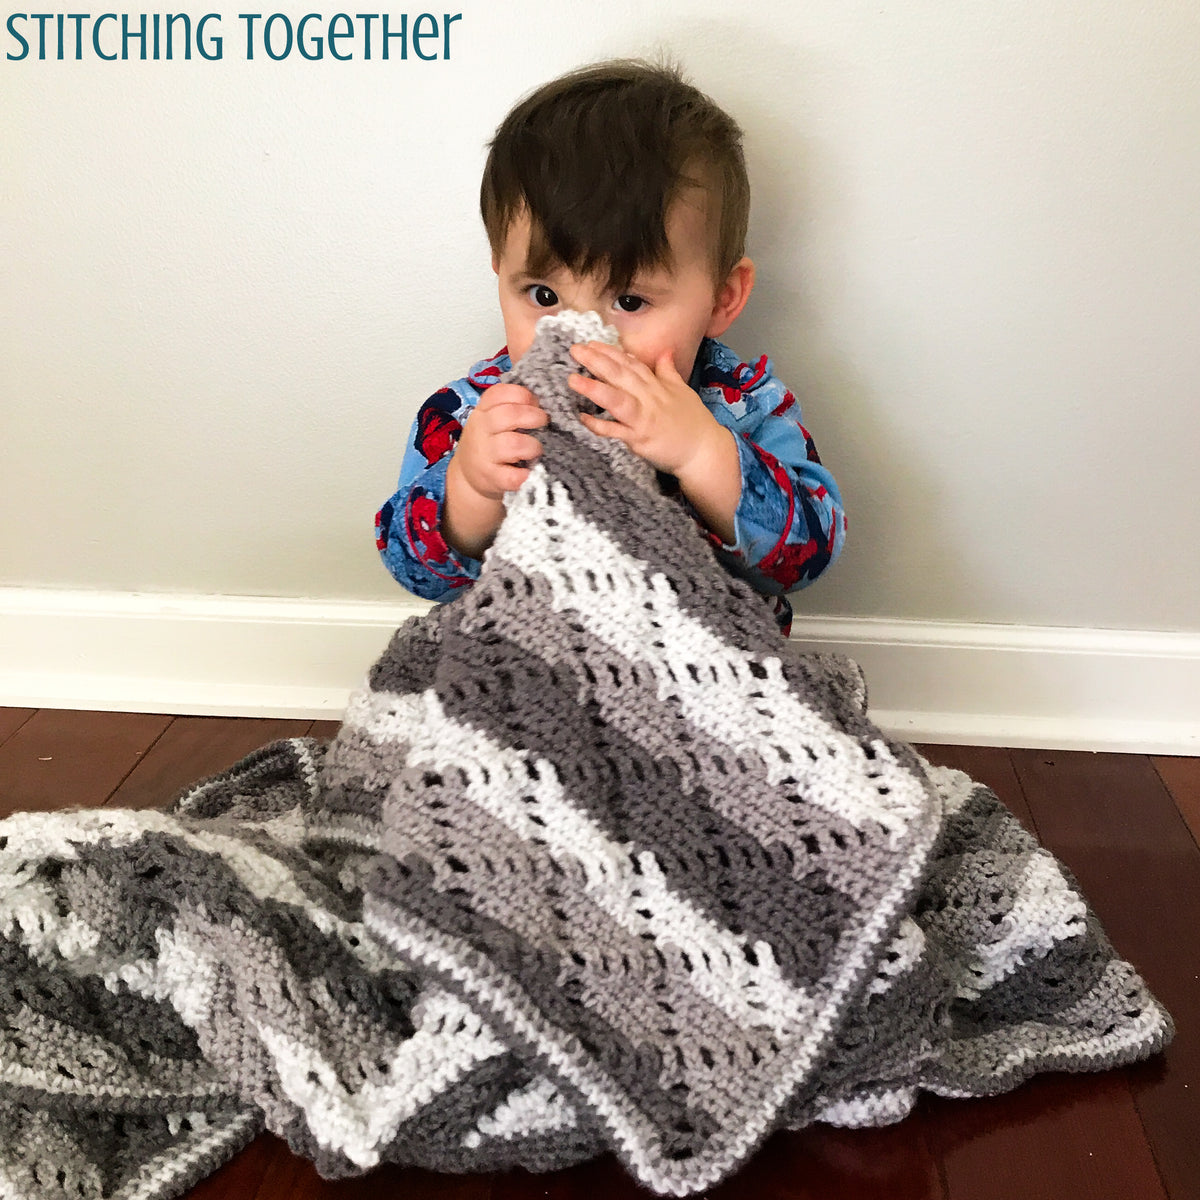 Diamond Lace Baby Blanket Crochet Pattern Download – Stitching